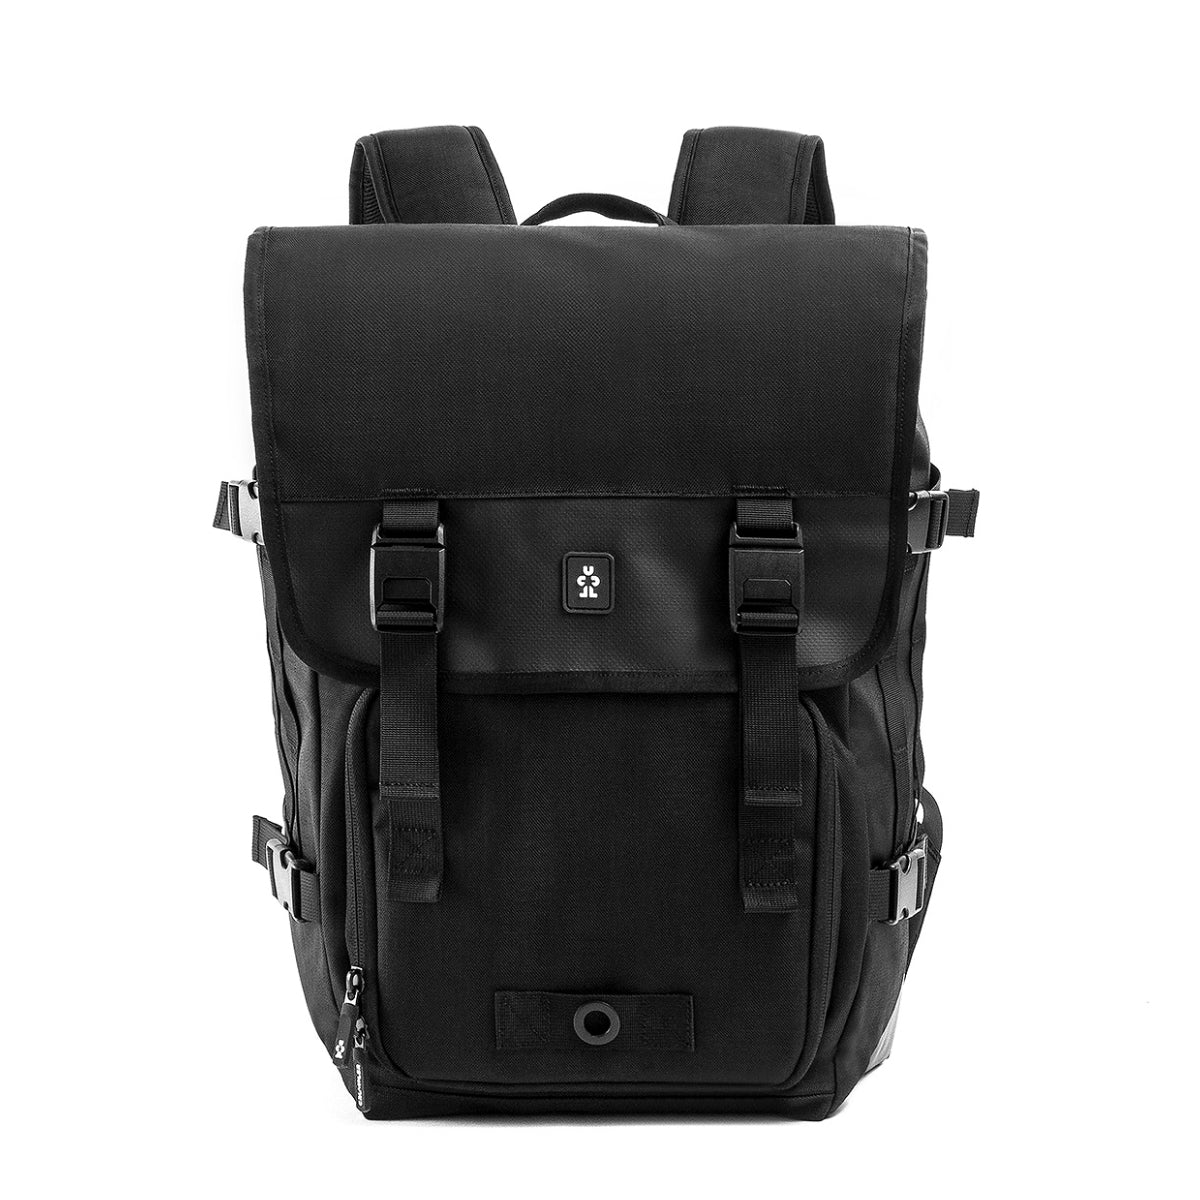 FrontRow Camera Half Backpack Kamerarucksack Vorderseite schwarz